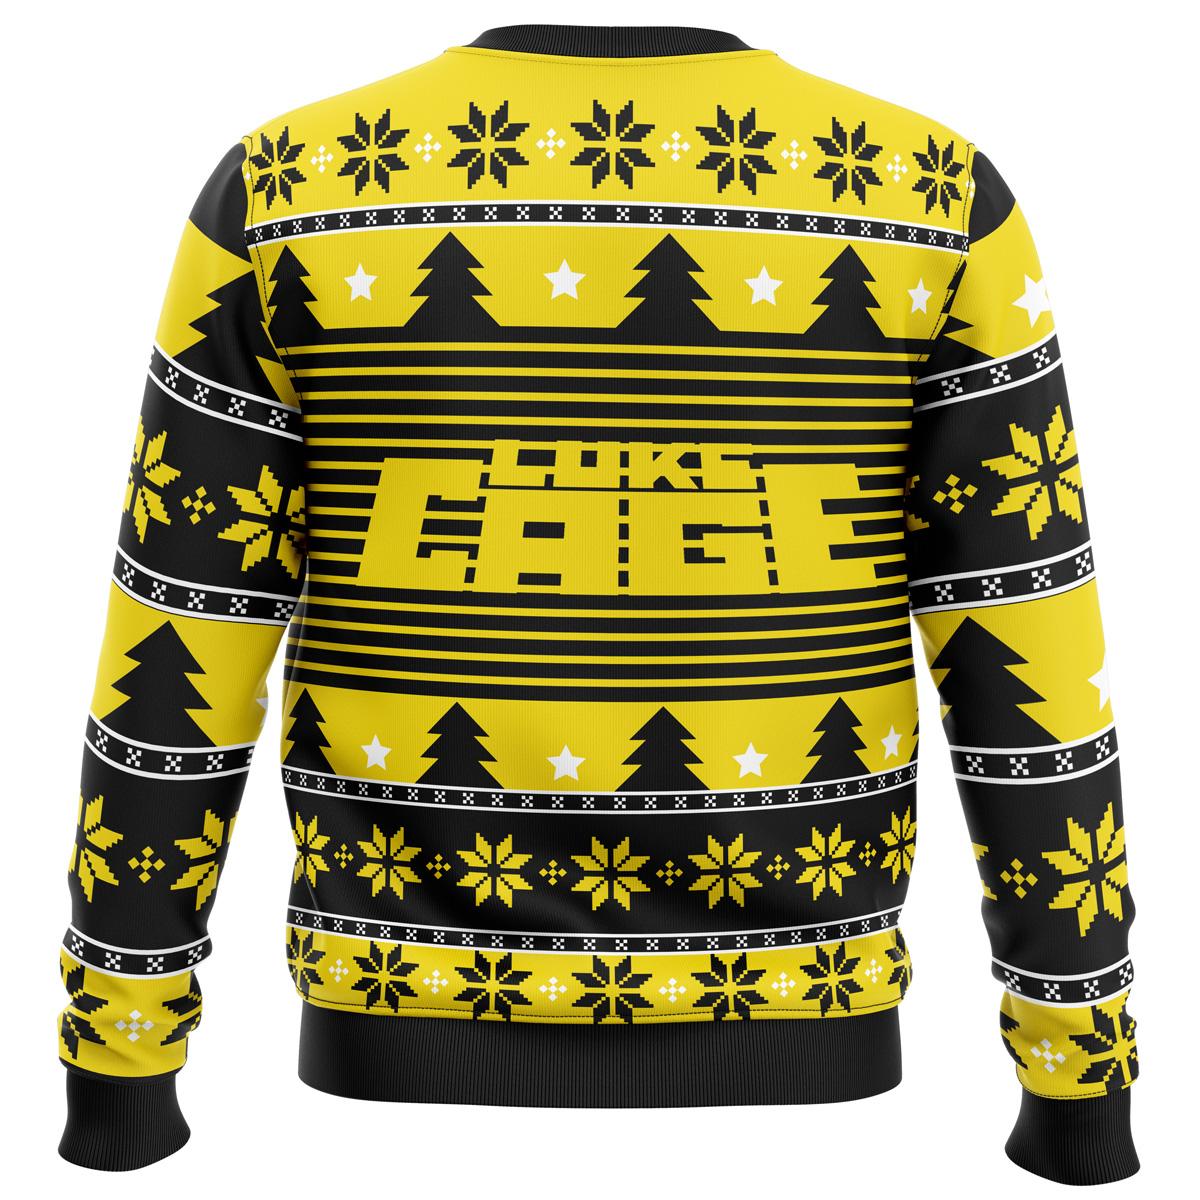 Sweet Christmas Luke Cage Ugly Sweater